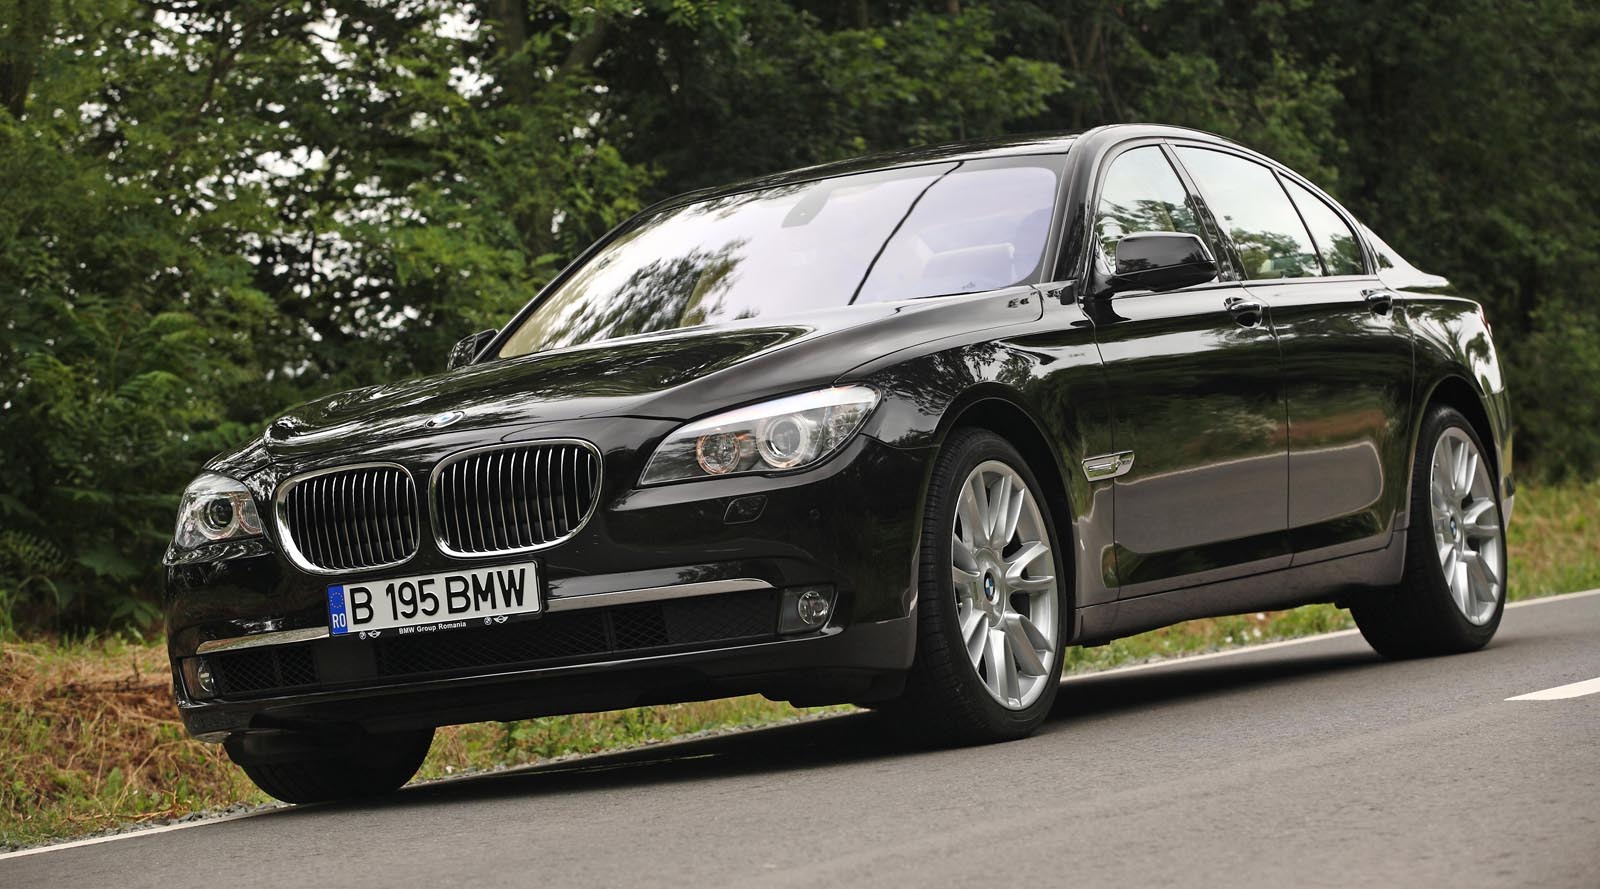 Vopseaua Individual Citrine Black face BMW Seria 7 sa afiseze un lux discret